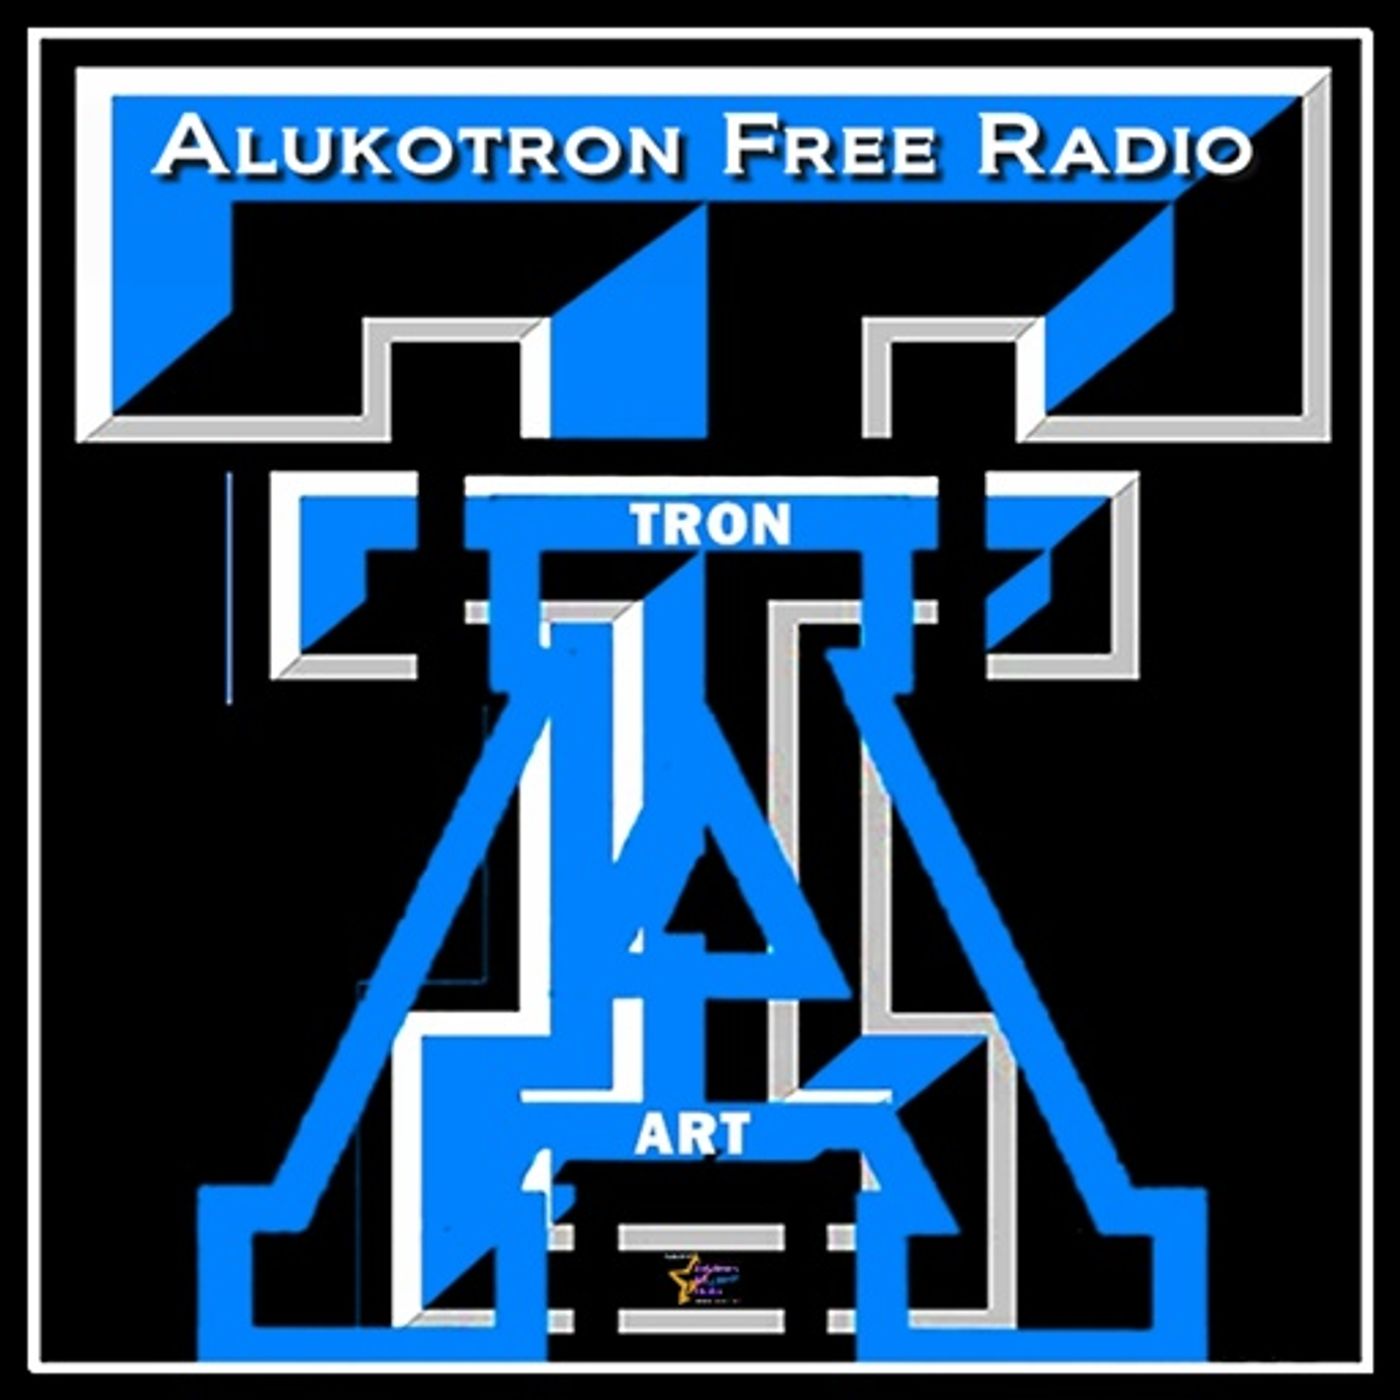 Alukotron Free Radio - Talk Show